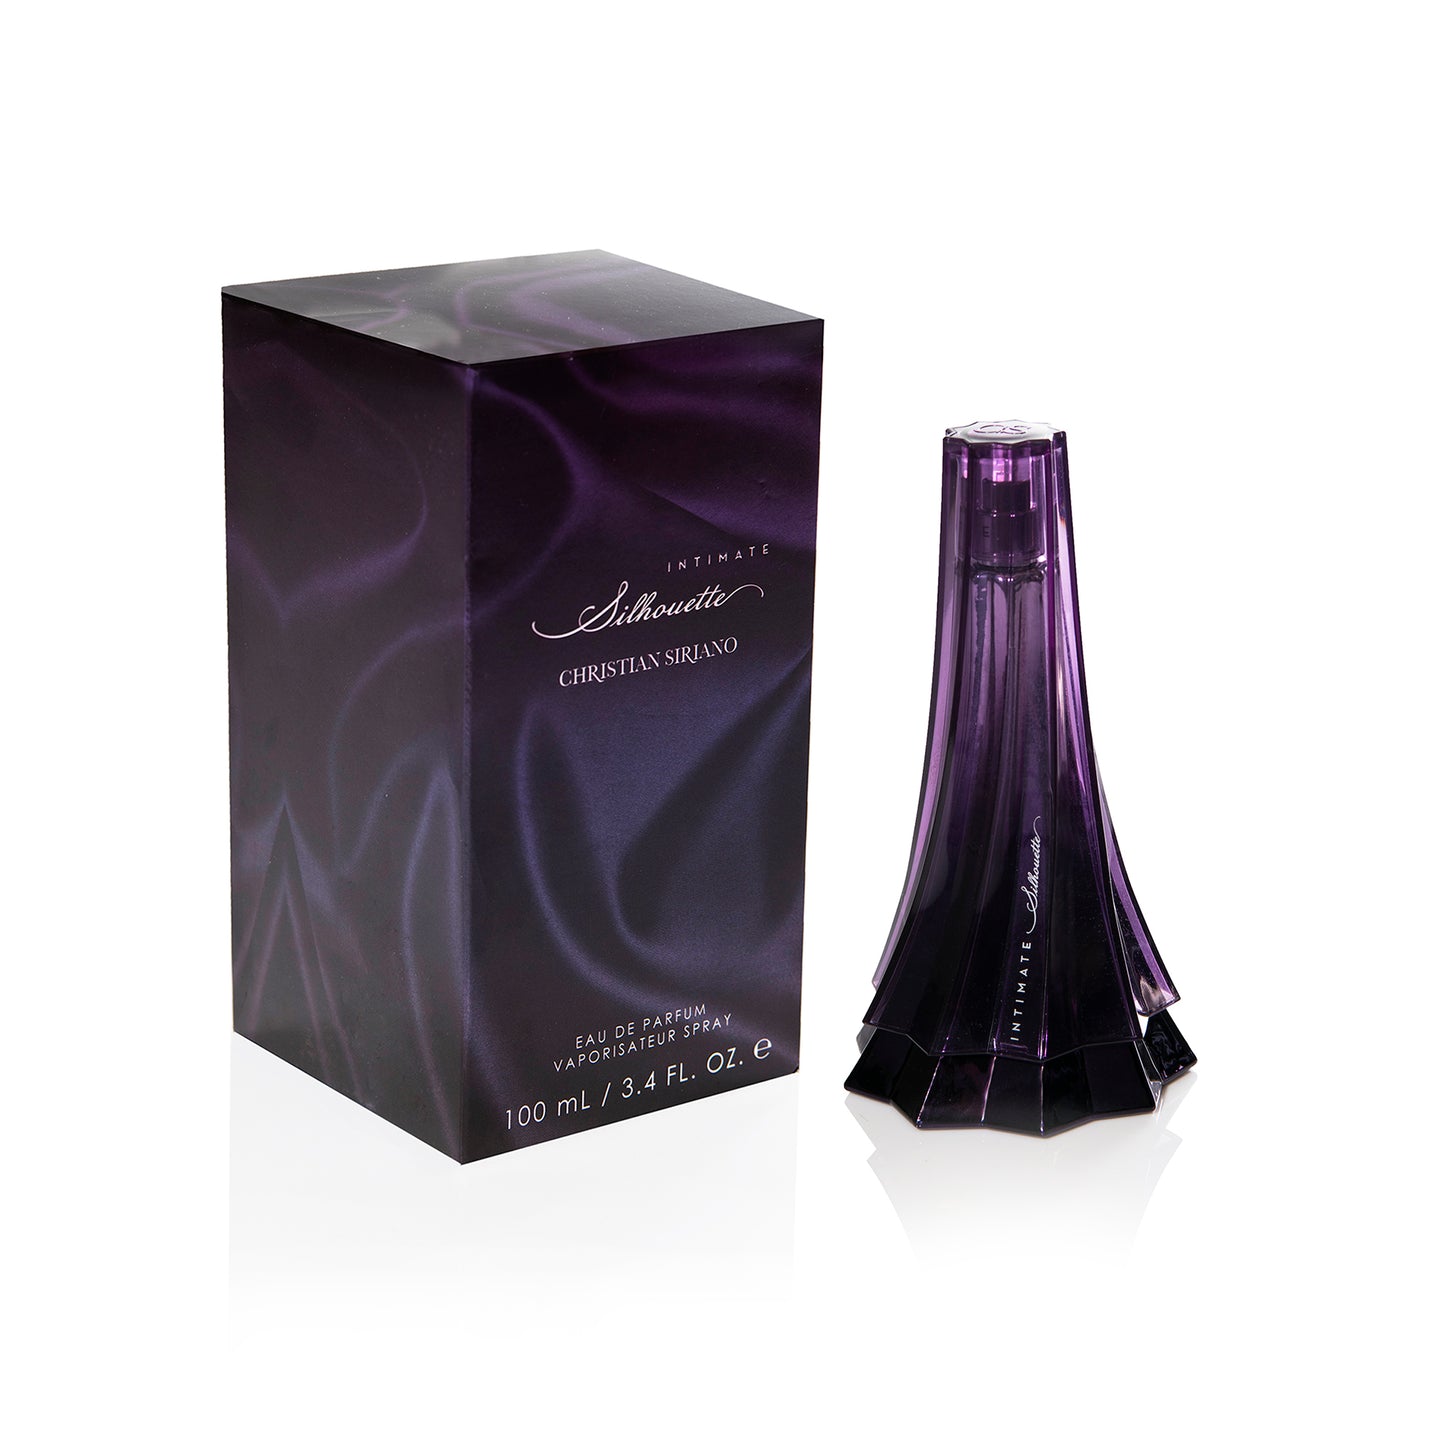 Intimate Silhouette 3.4 oz Eau de Parfum